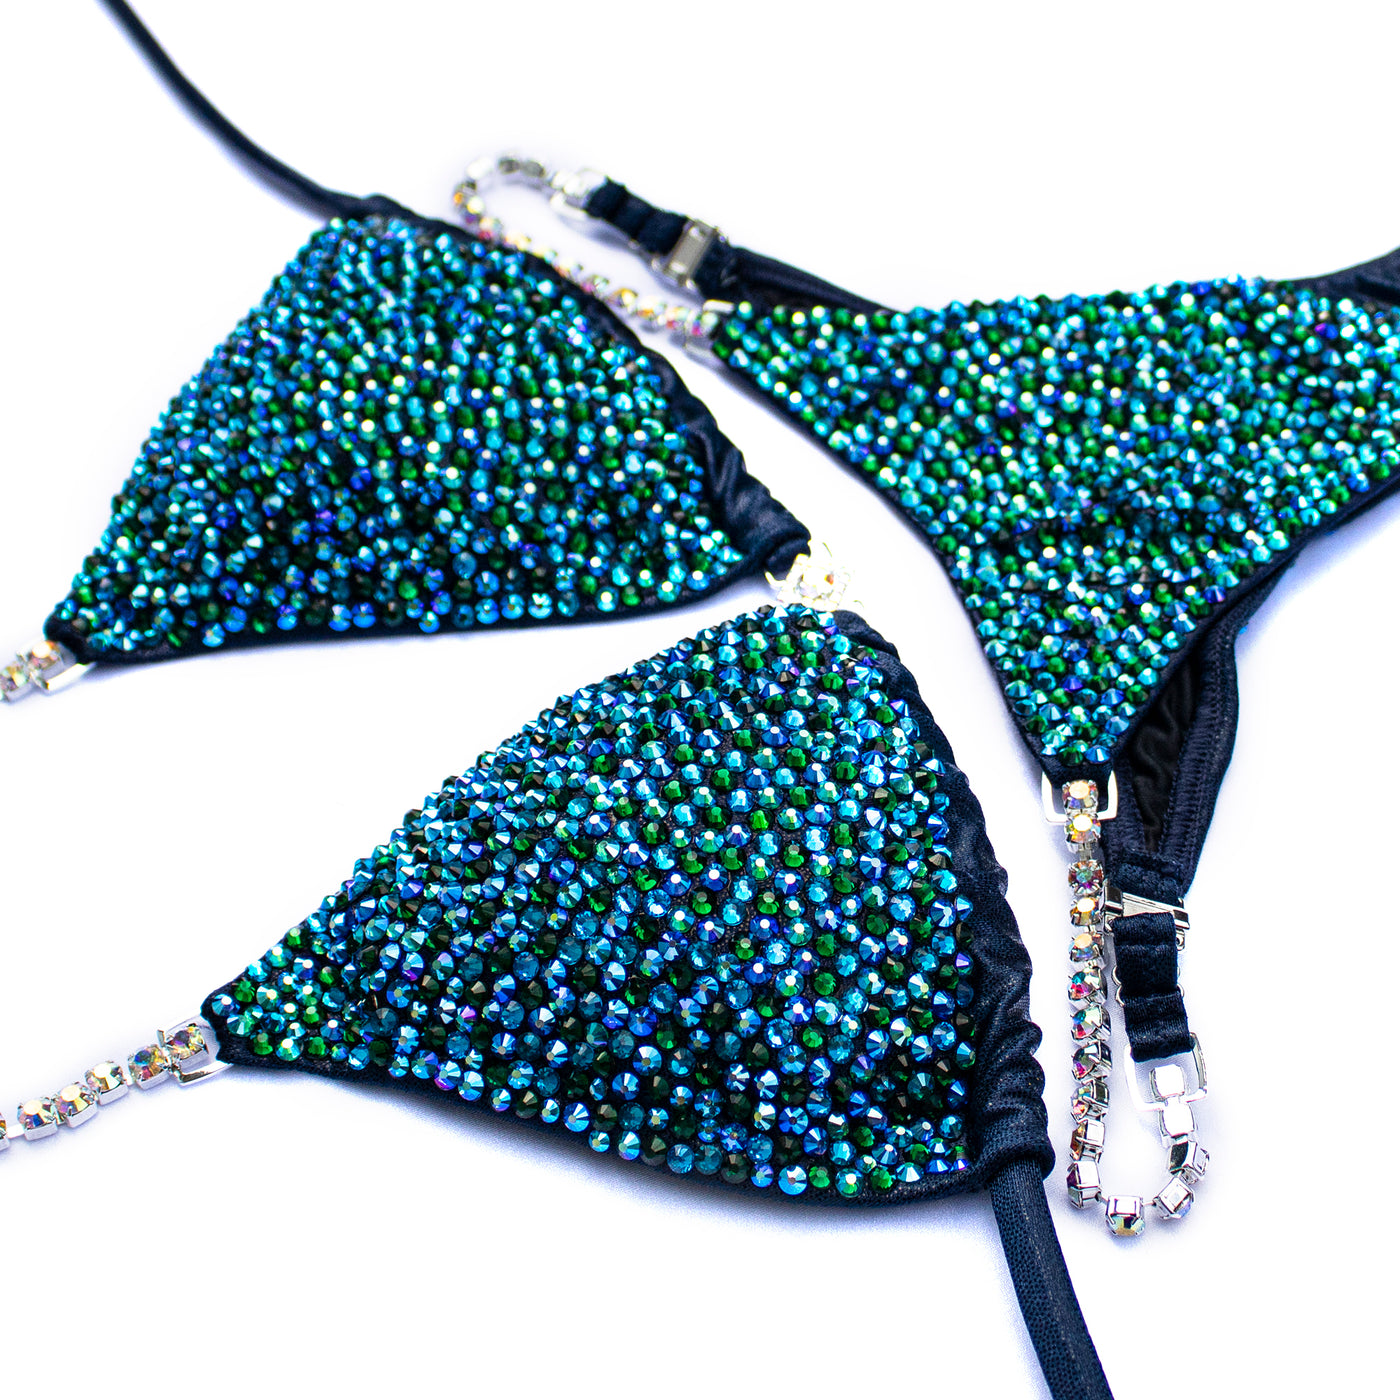 Jasper Green Competition Bikini | OMG Bikinis